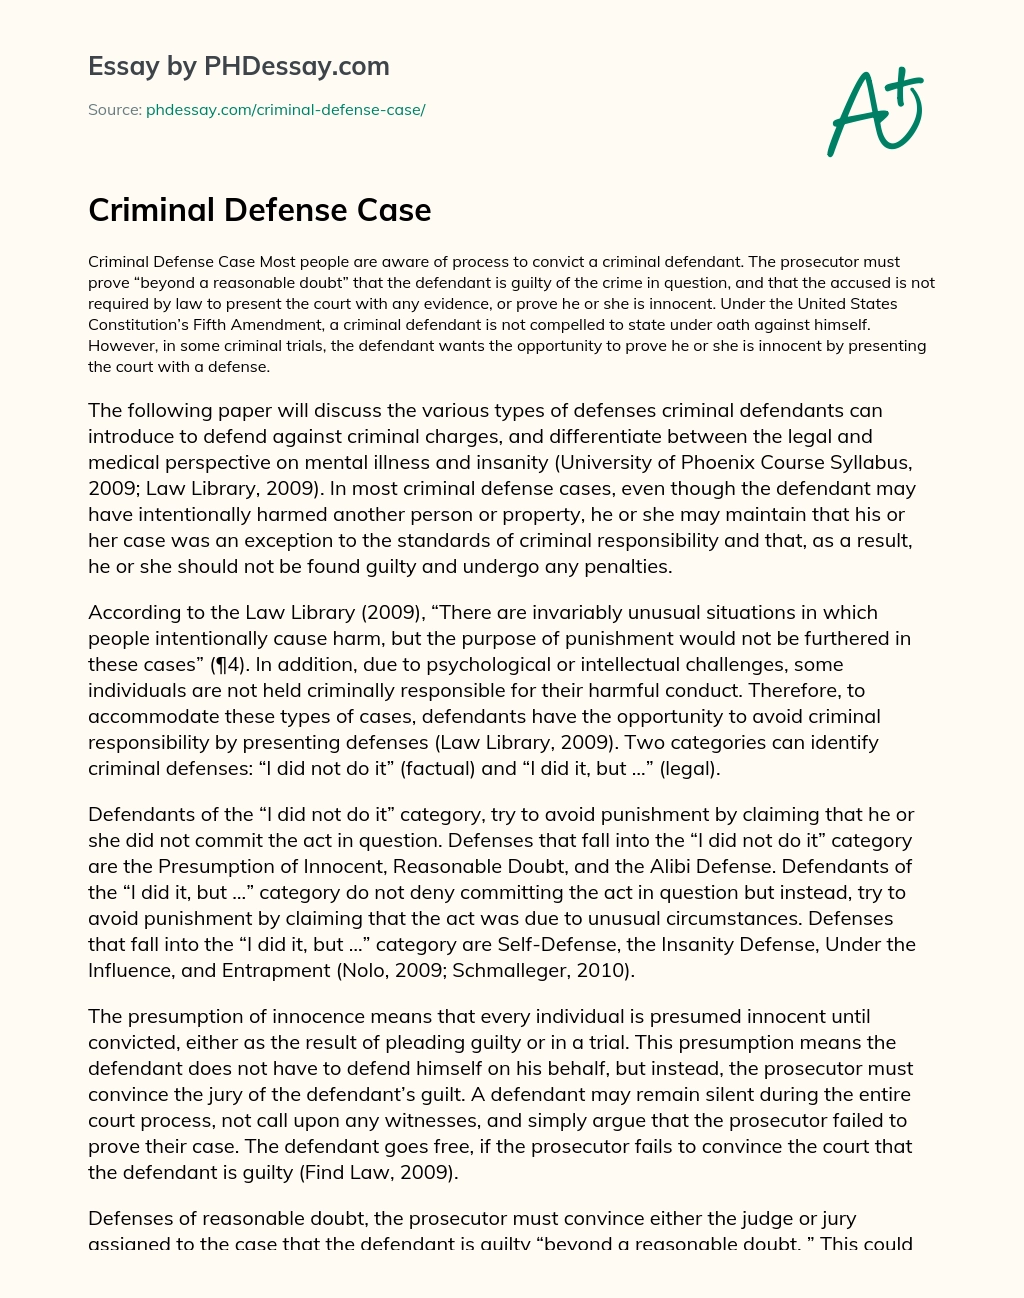 Criminal Defense Case essay